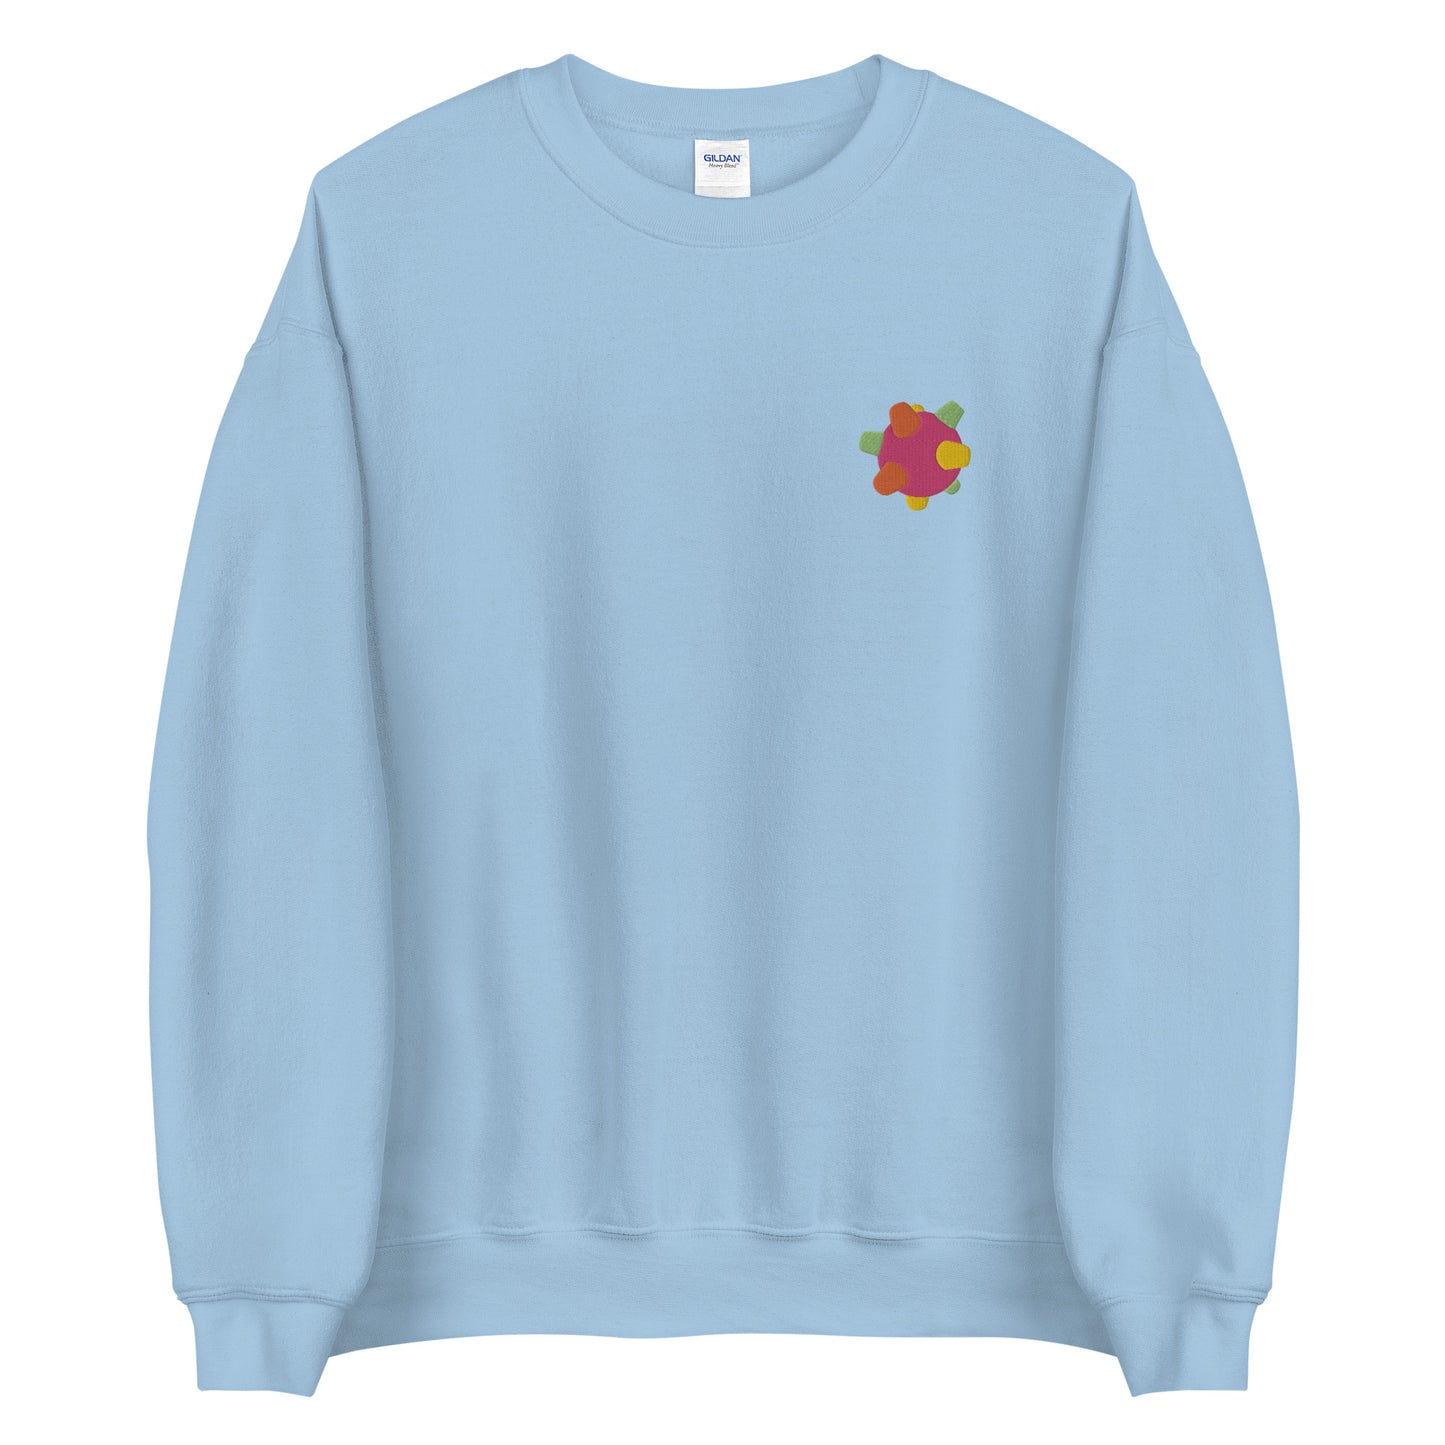 Bumbling Around embroidered crewneck sweatshirt